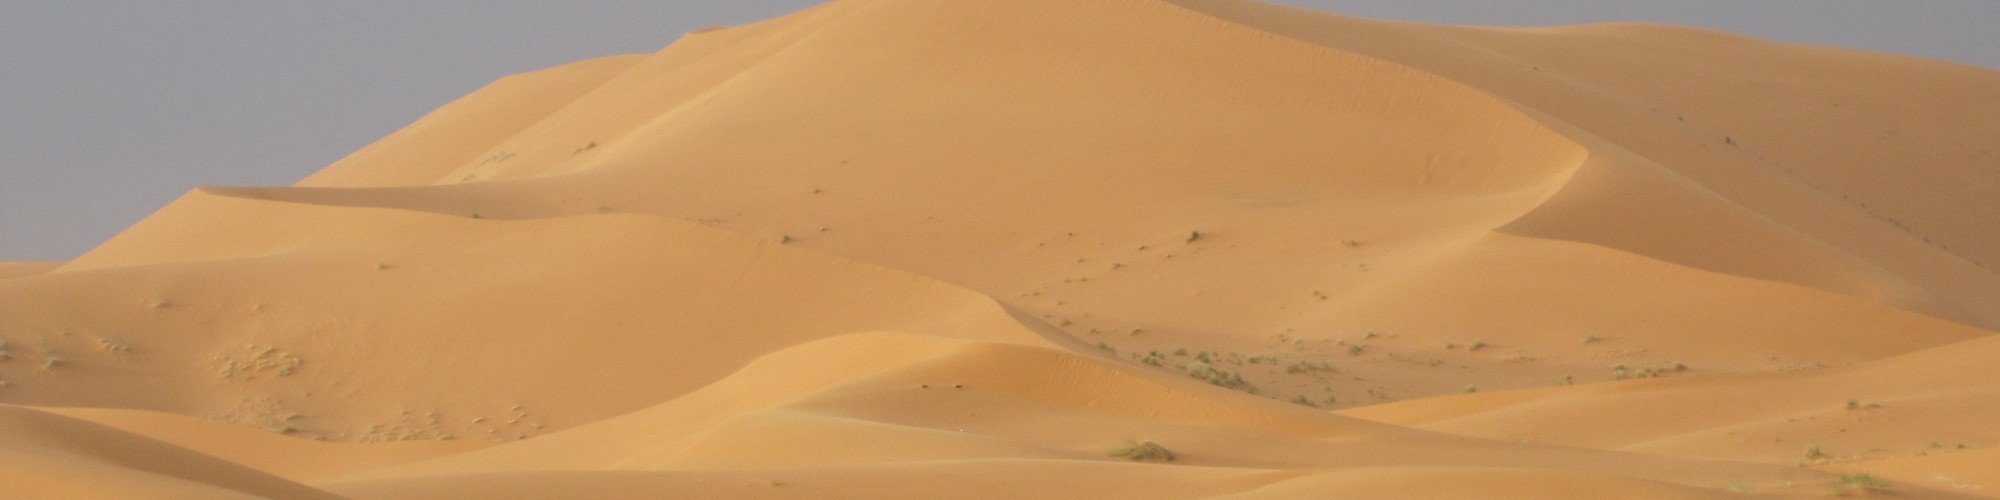 Morocco - Sahara Desert